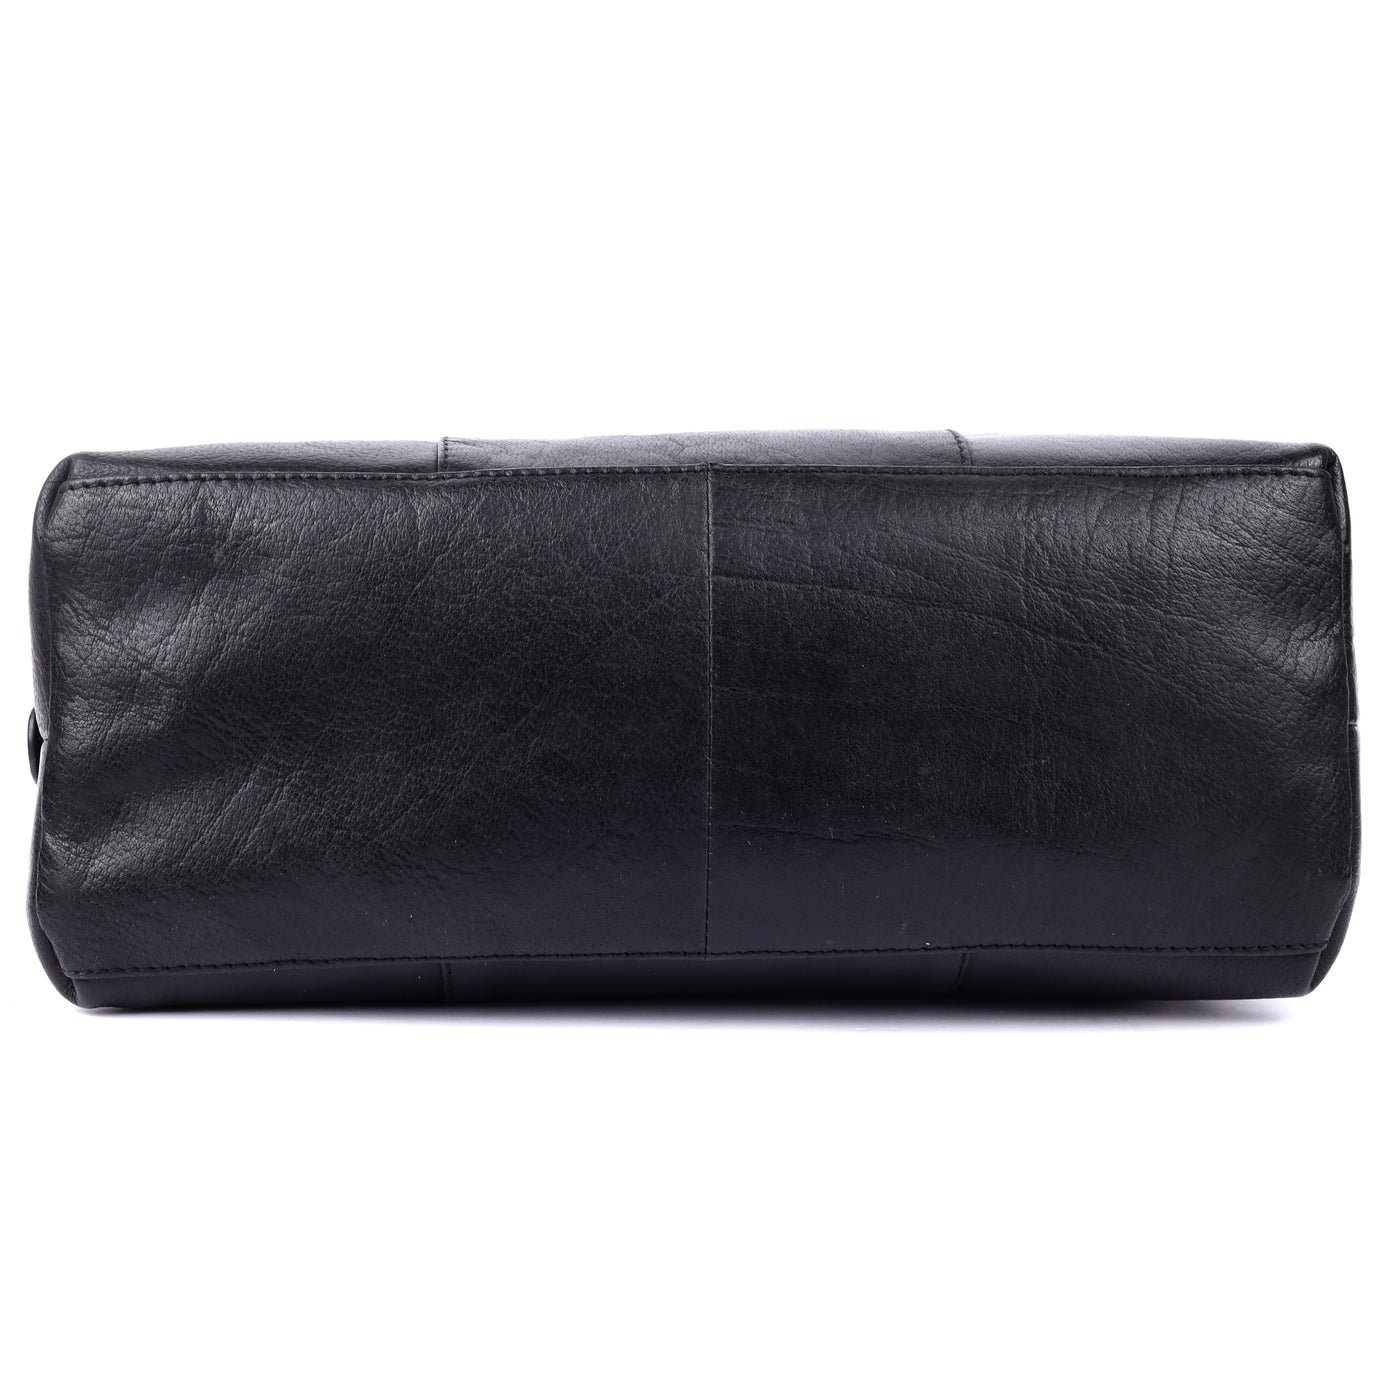 New Design Black Leather Wash Bag: Modern Luxury for Travel